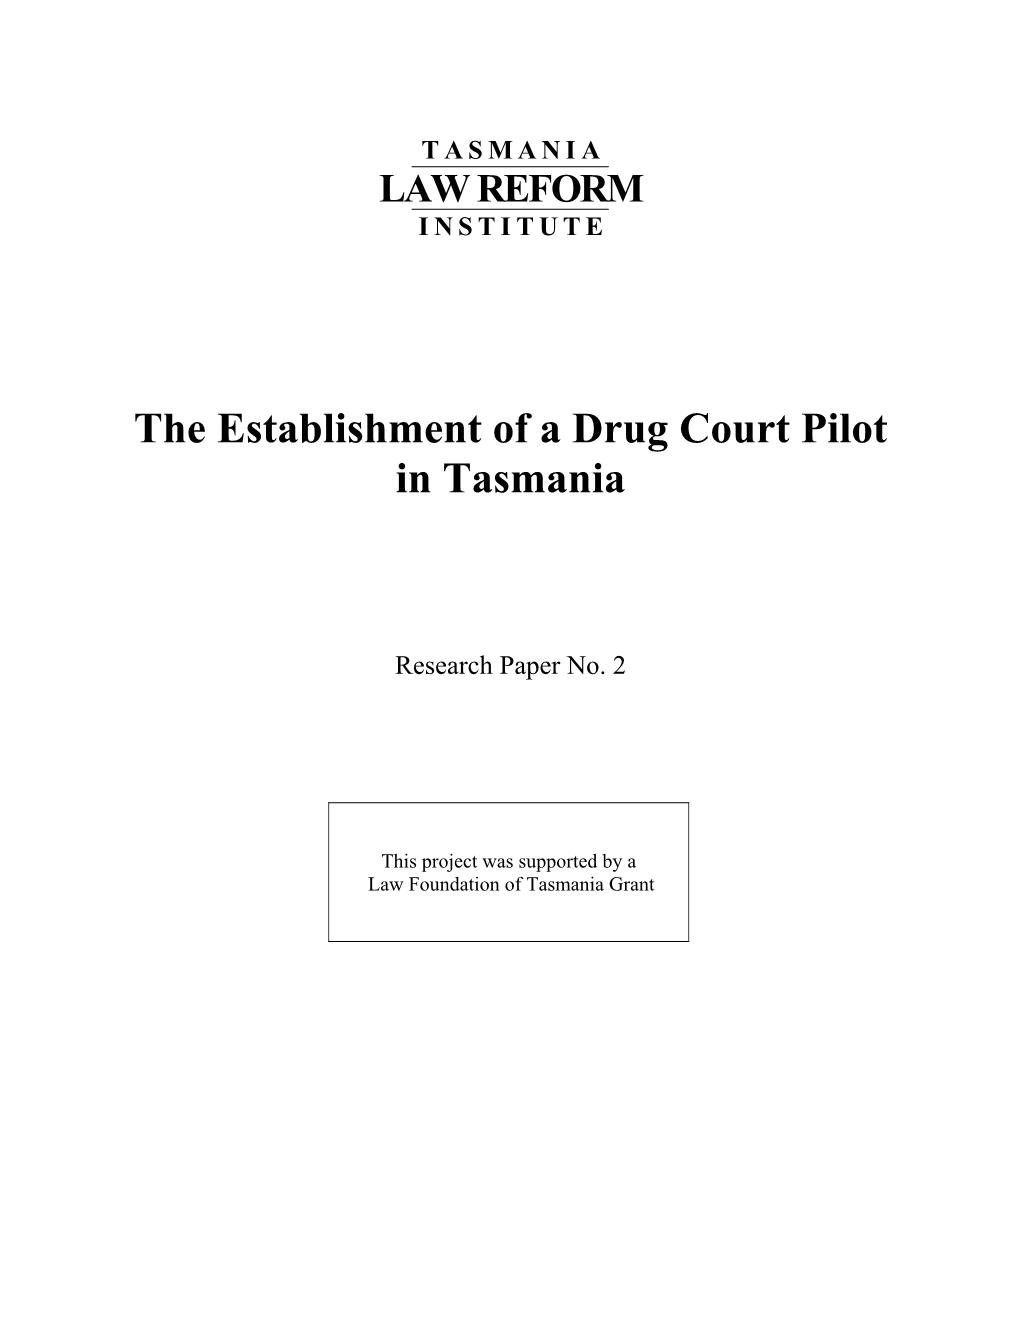 The Establishment of a Drug Court Pilot in Tasmania